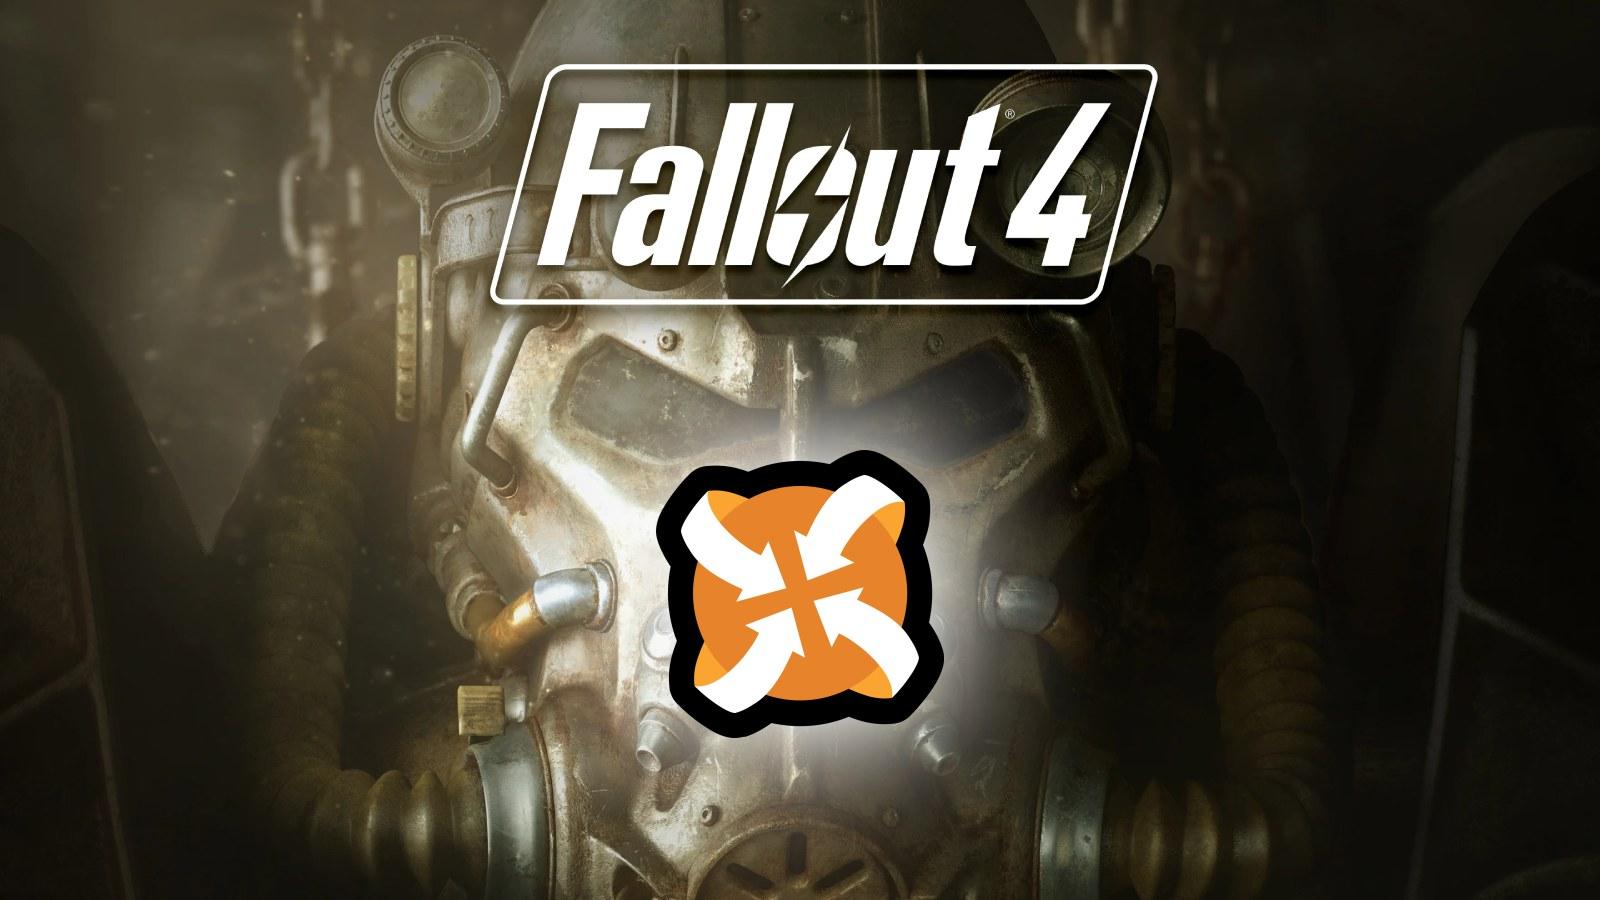 Fallout 4 key art with lexusmods logo on top